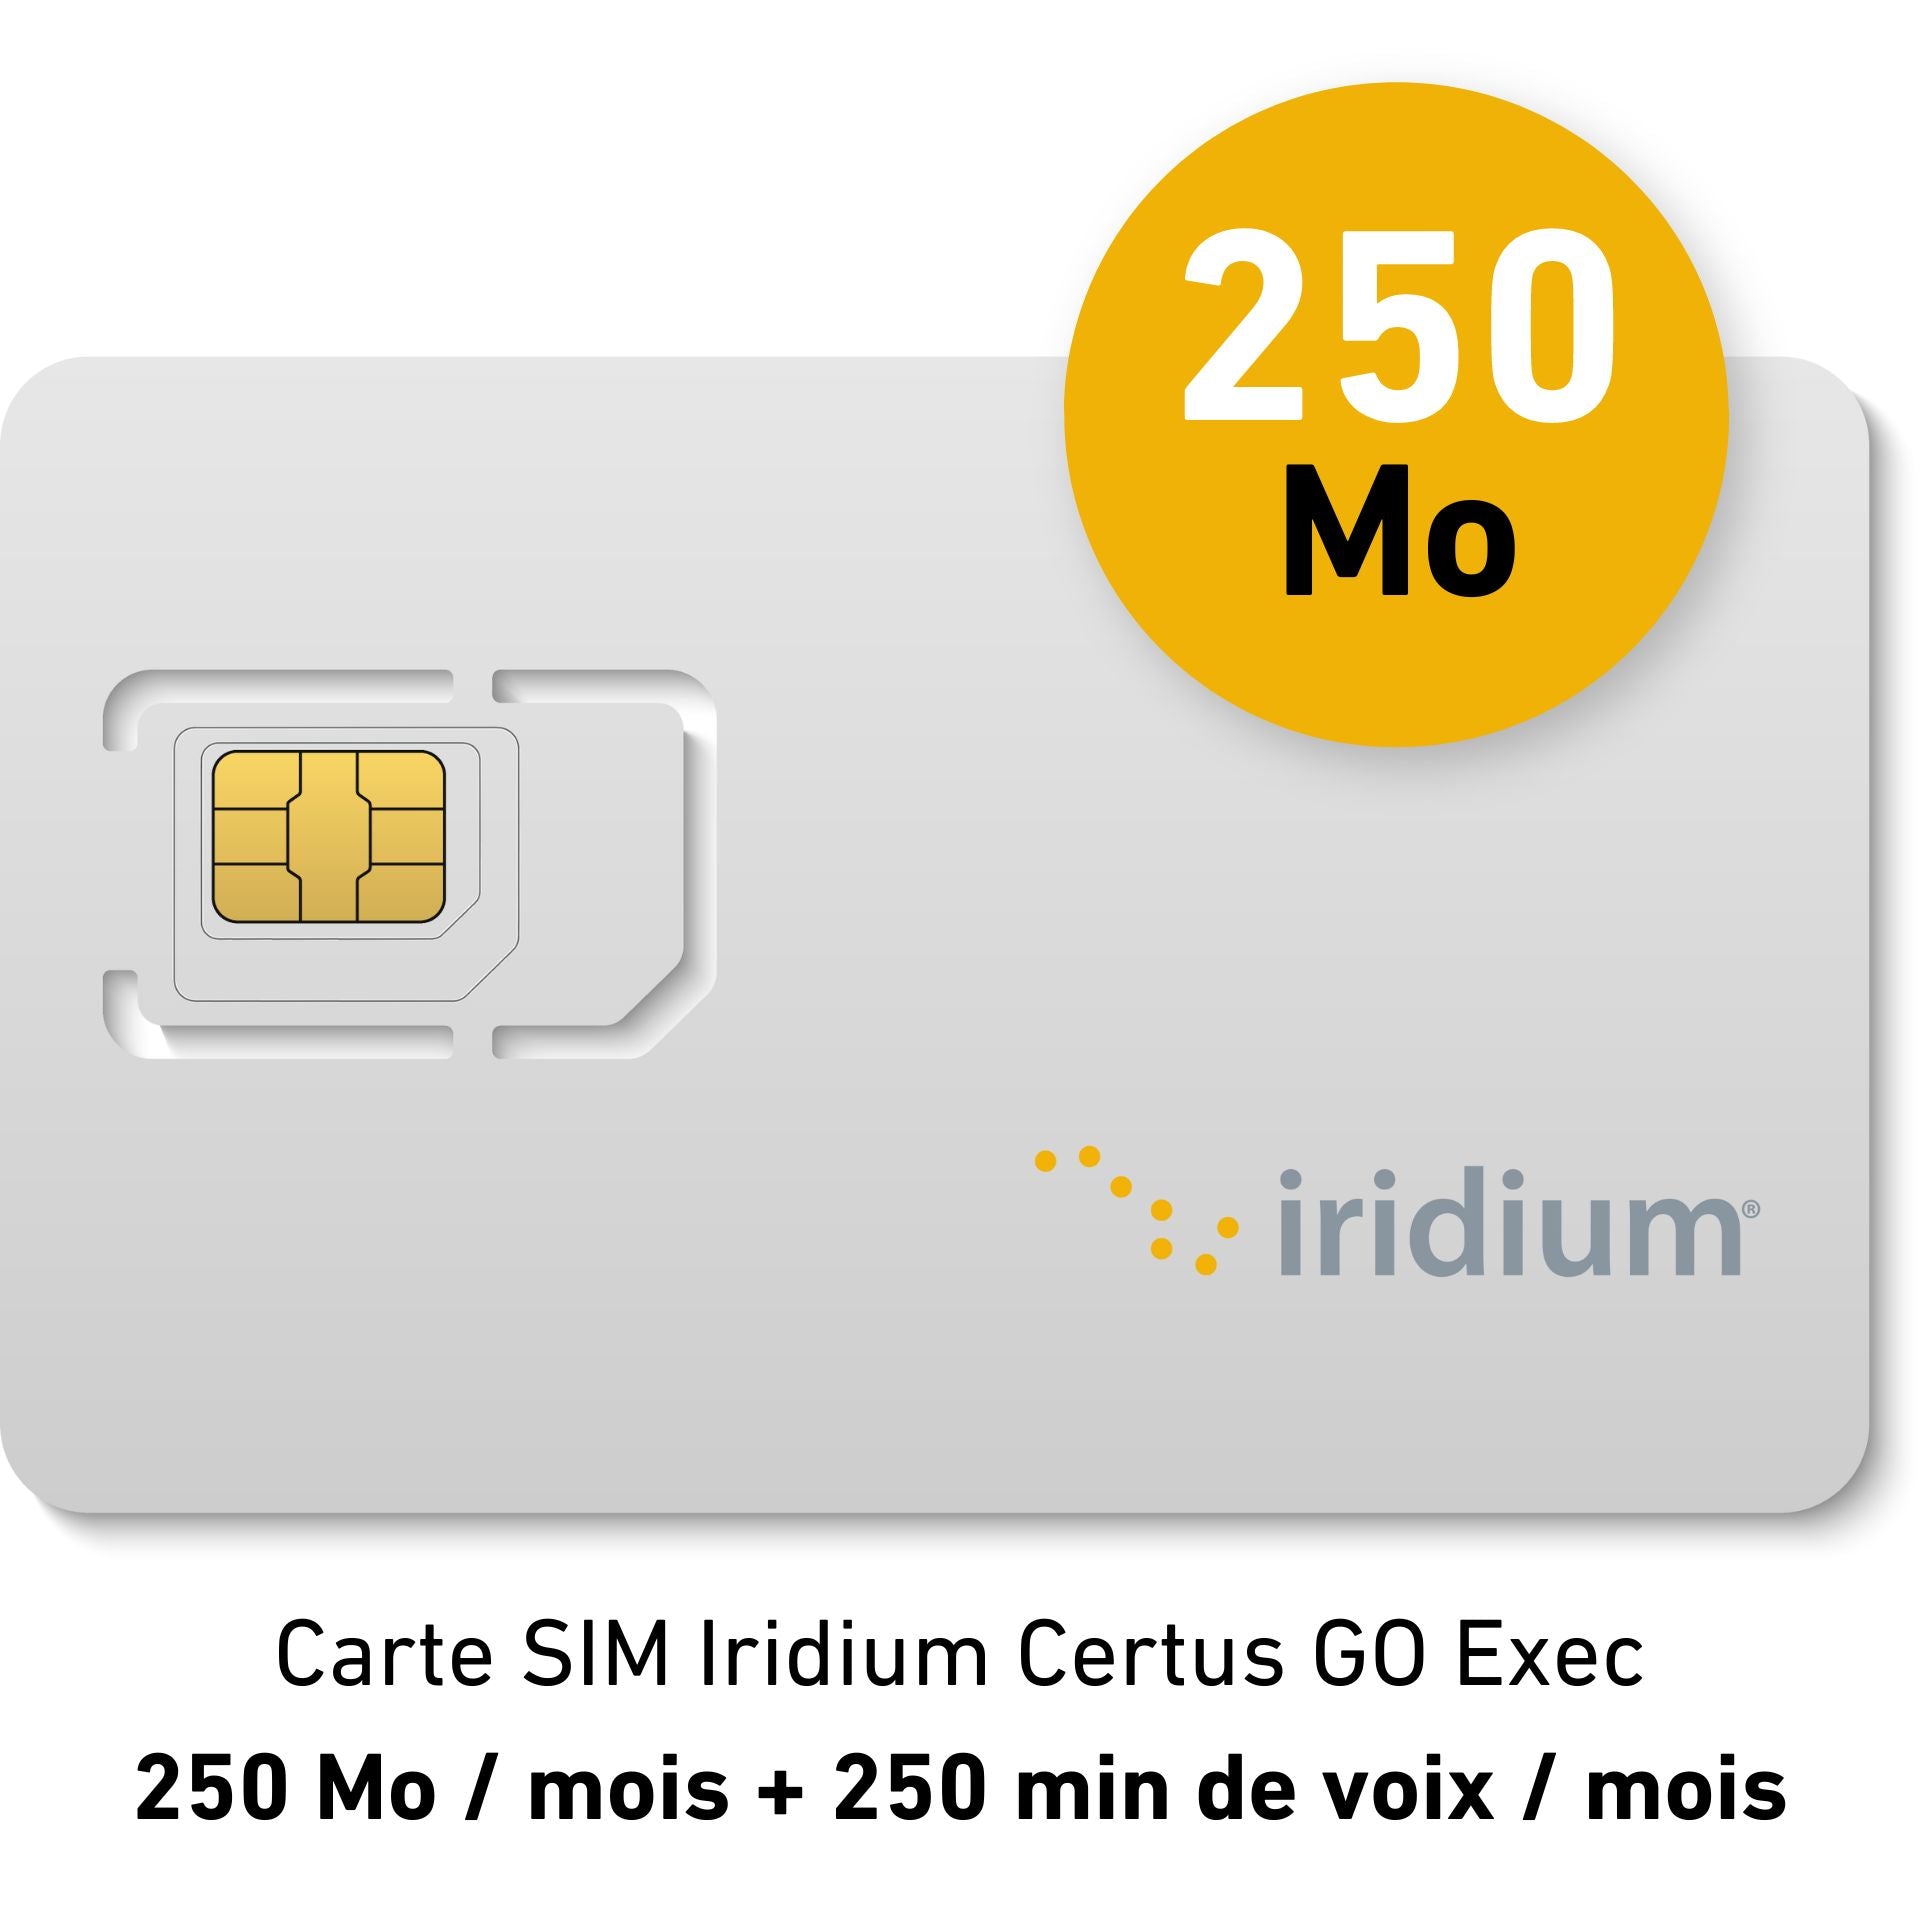 Iridium Certus GO Exec Monthly Pleasure Subscription - 250MB/month + 250 min voice/month